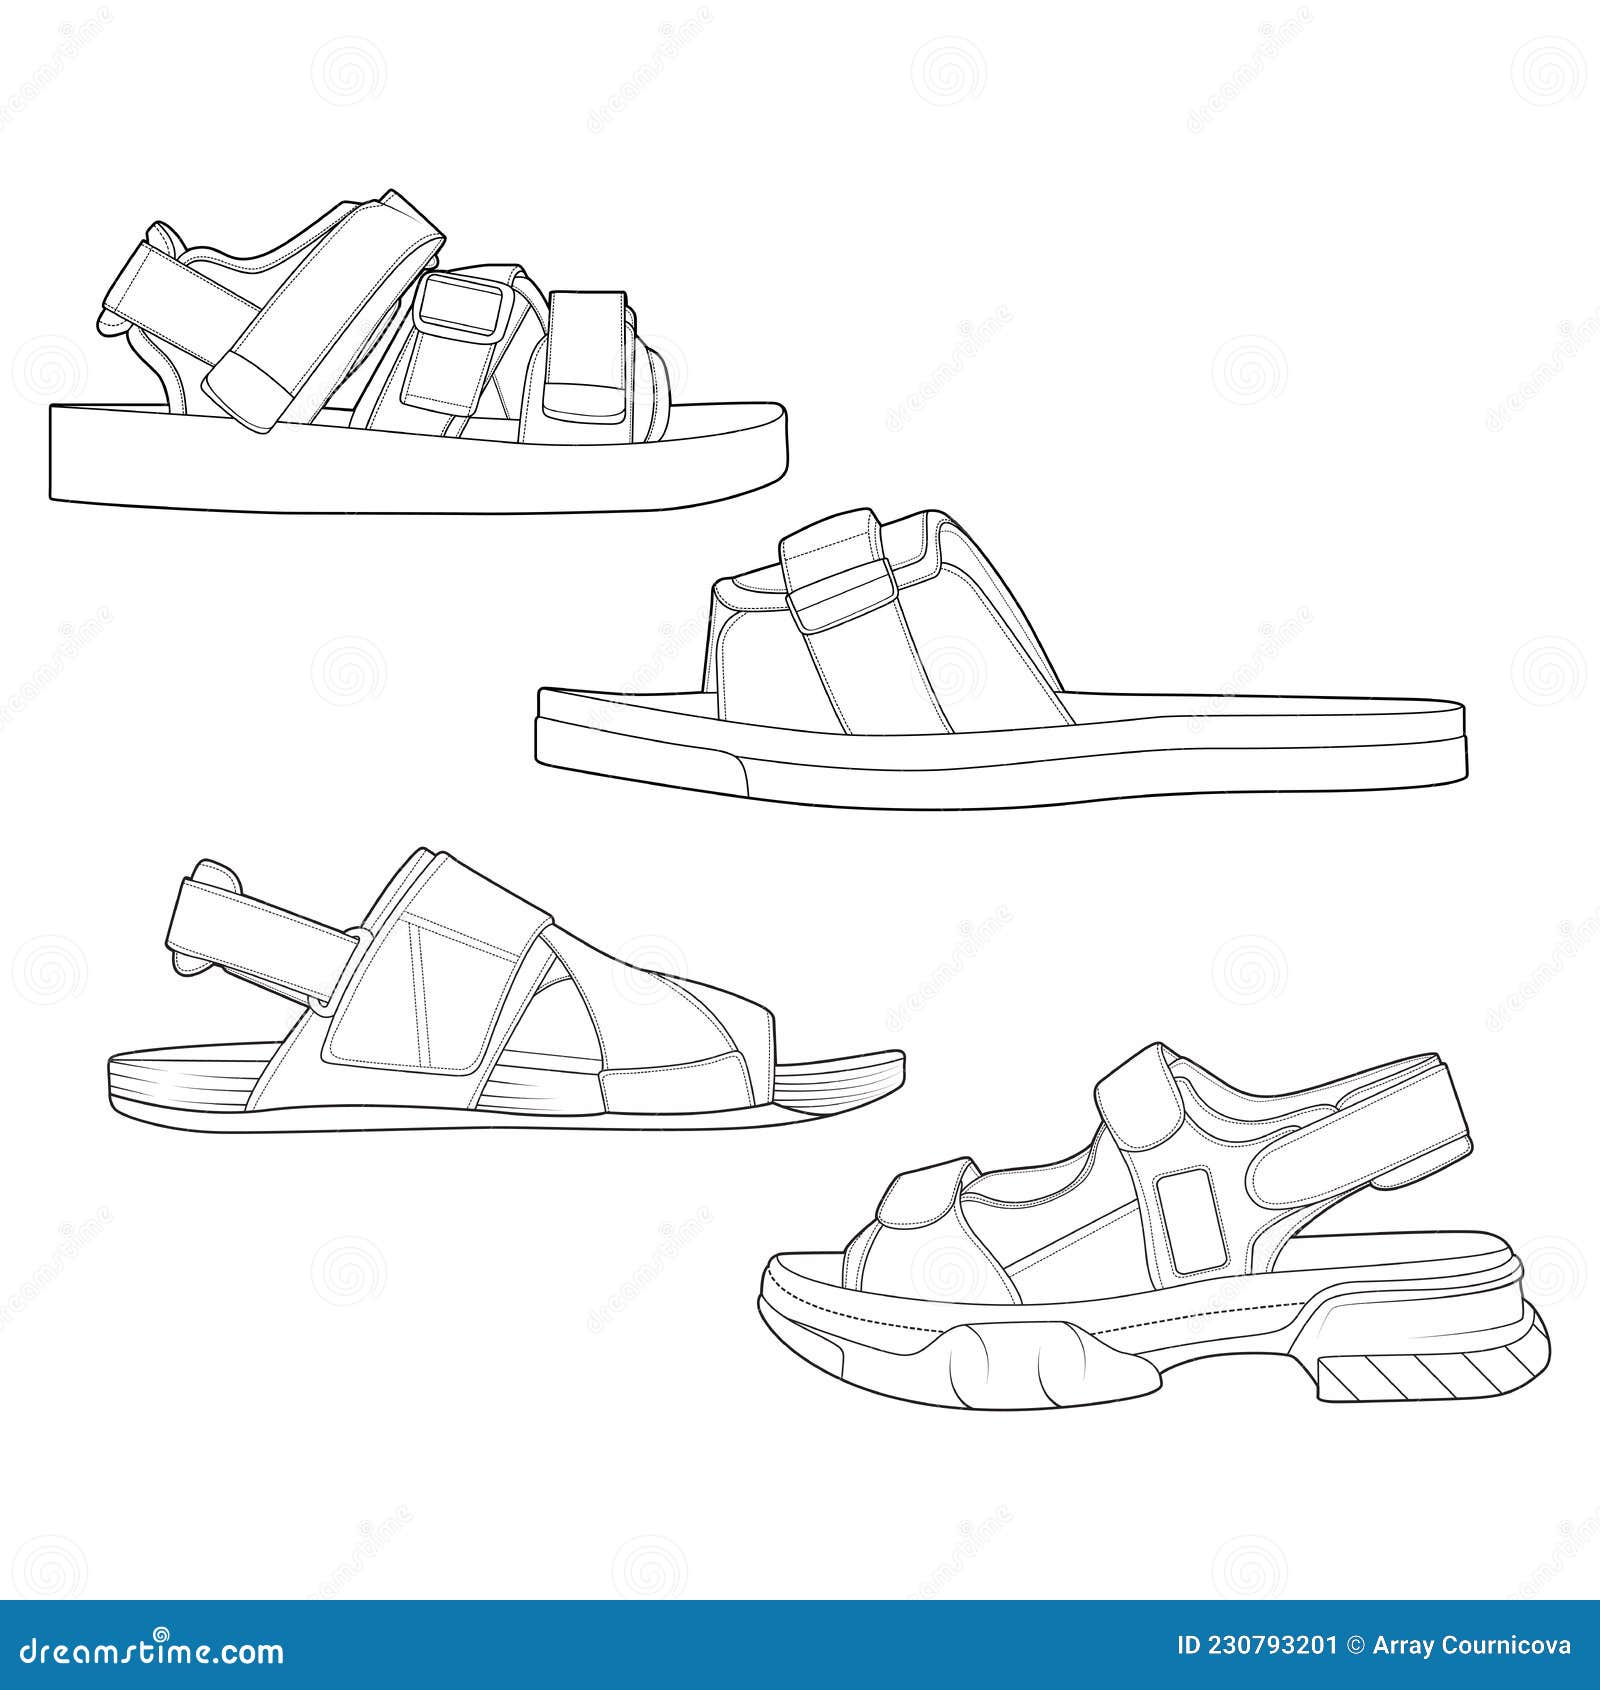 4 Set Strap Sandals Outline Drawing Vector, Strap Sandals in a Sketch